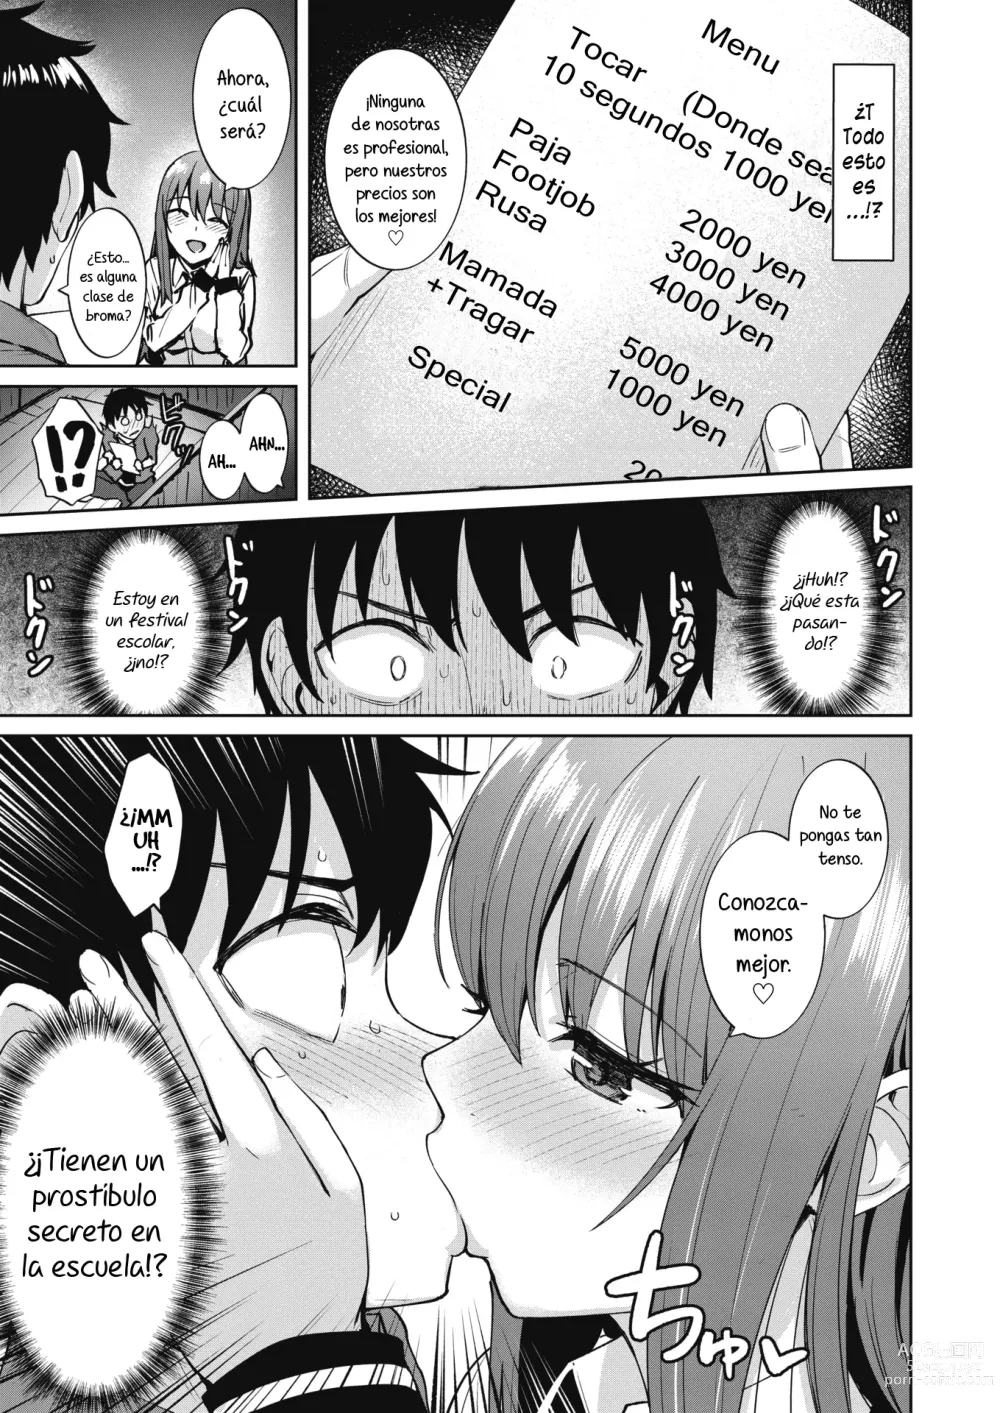 Page 5 of manga Dore ni Suru? - Which ecstasy do you want?